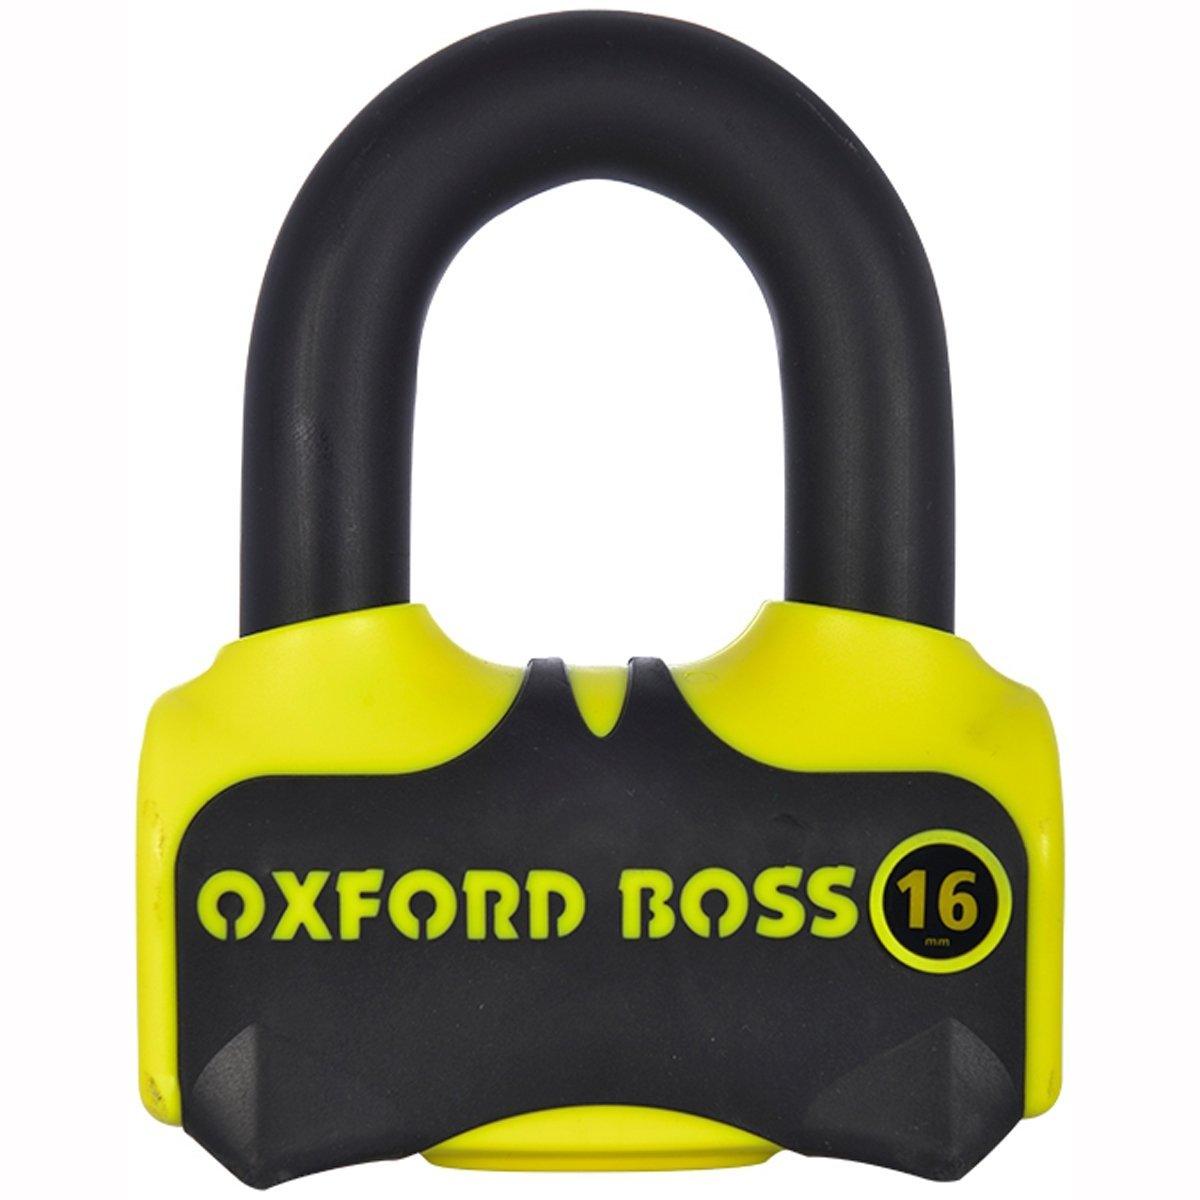 Oxford Boss 16 Disc Lock - Yellow